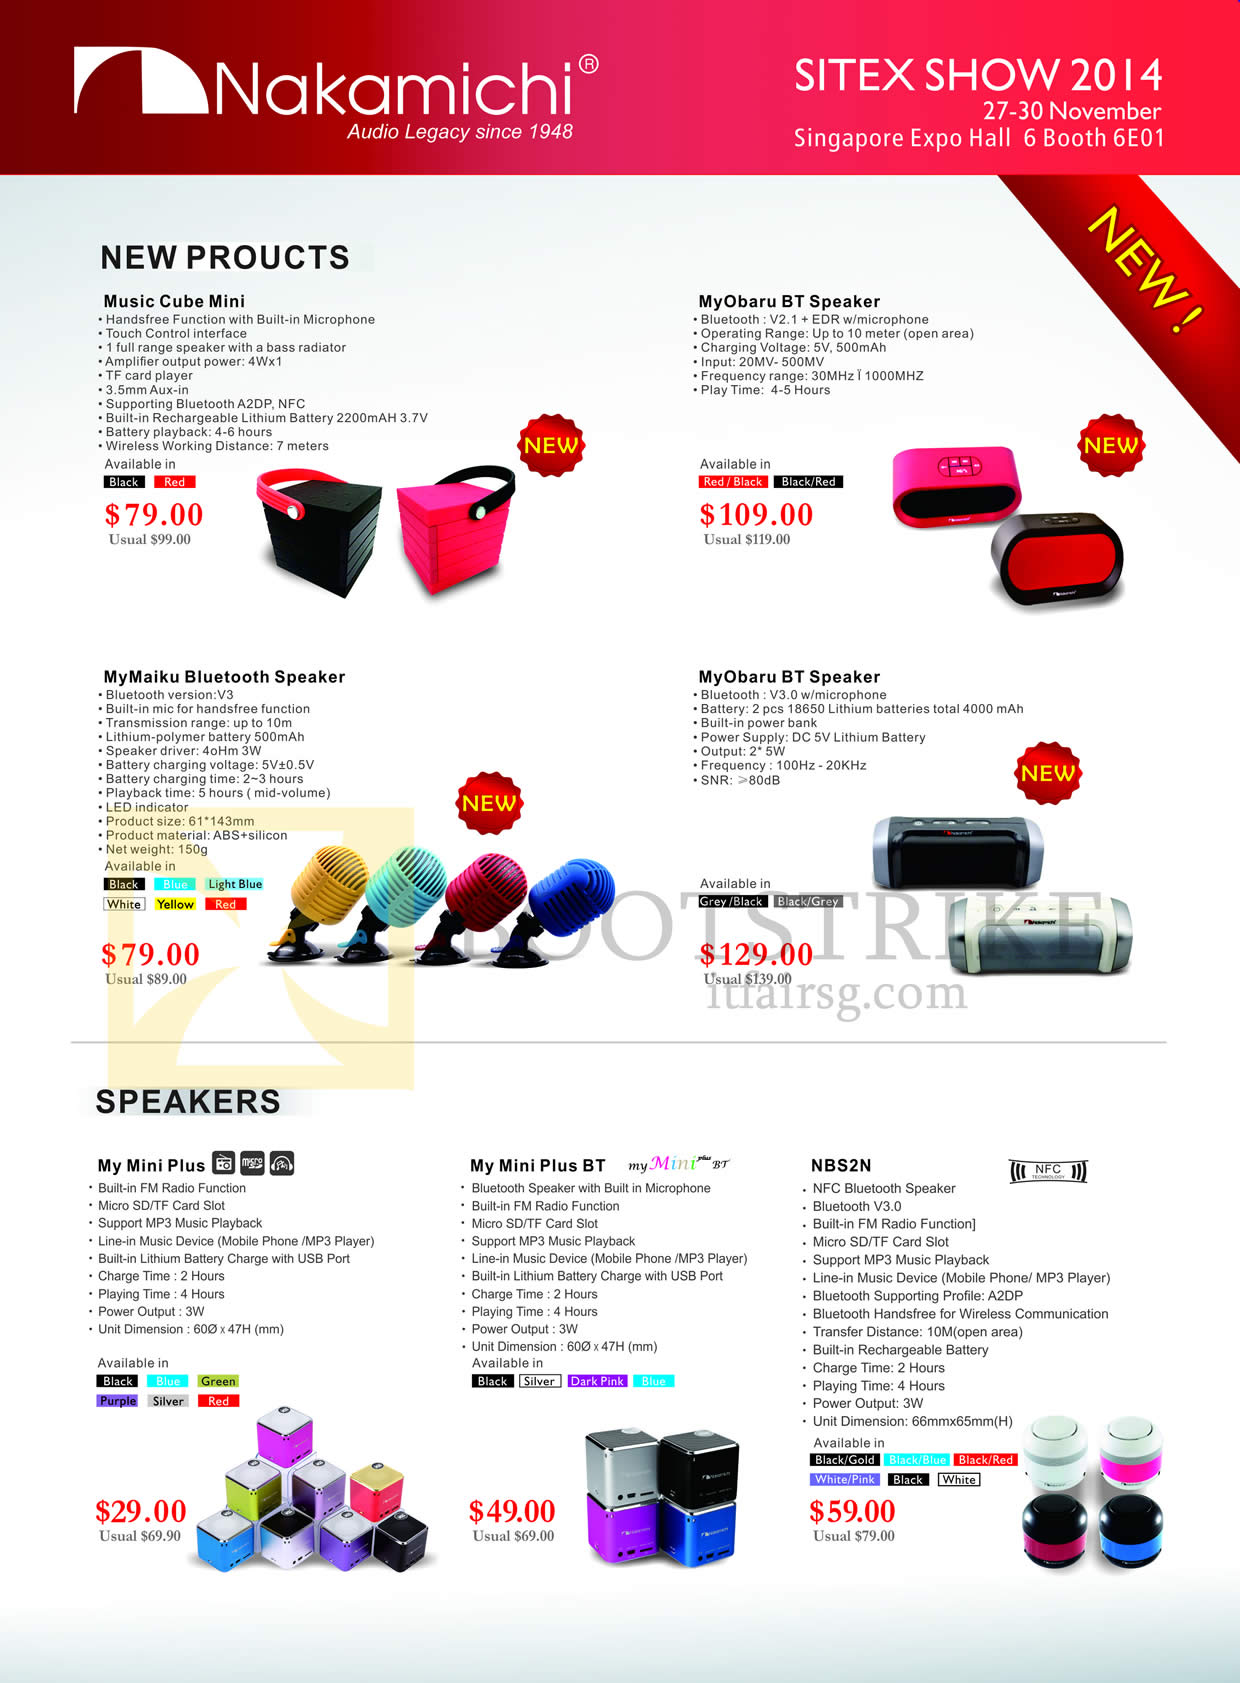 SITEX 2014 price list image brochure of Epicentre Nakamichi Speakers Music Cube Mini, MyMaiku Bluetooth Speaker, MyObaru BT Speaker, My Mini Plus, My Mini Plus BT, NBS2N